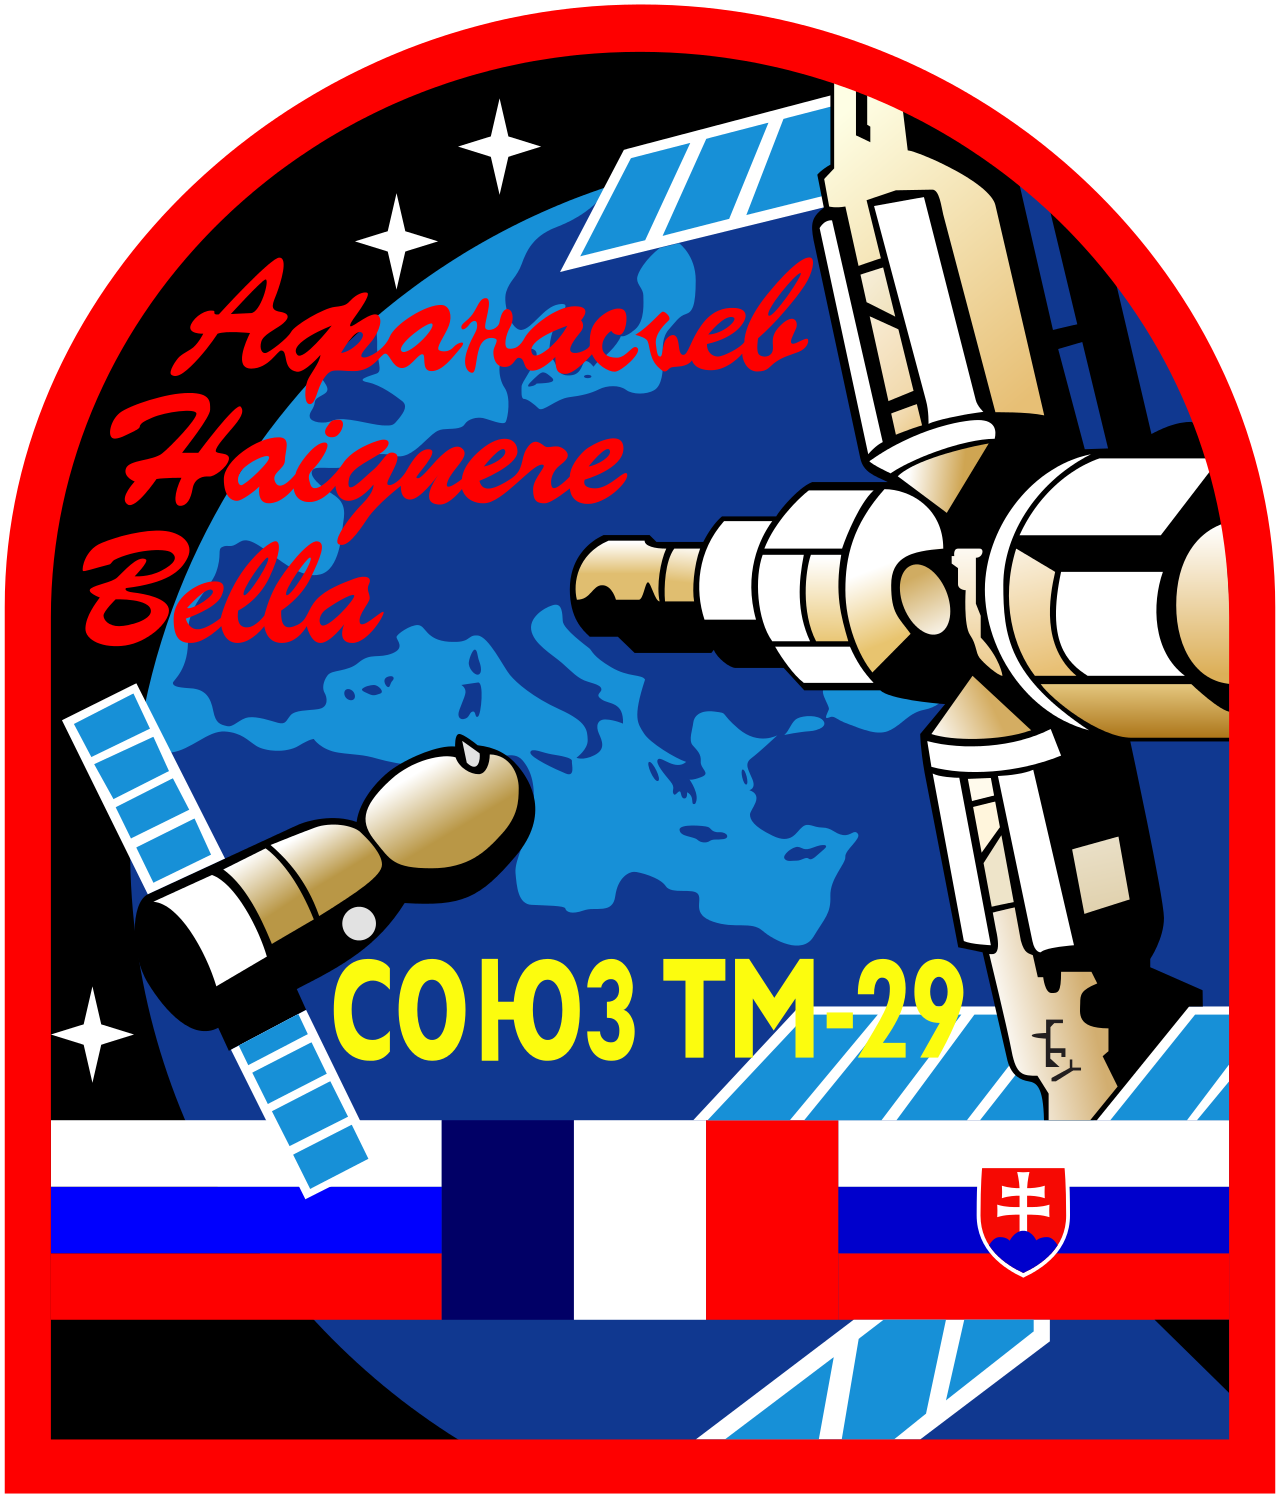 Mission patch for Soyuz TM-29